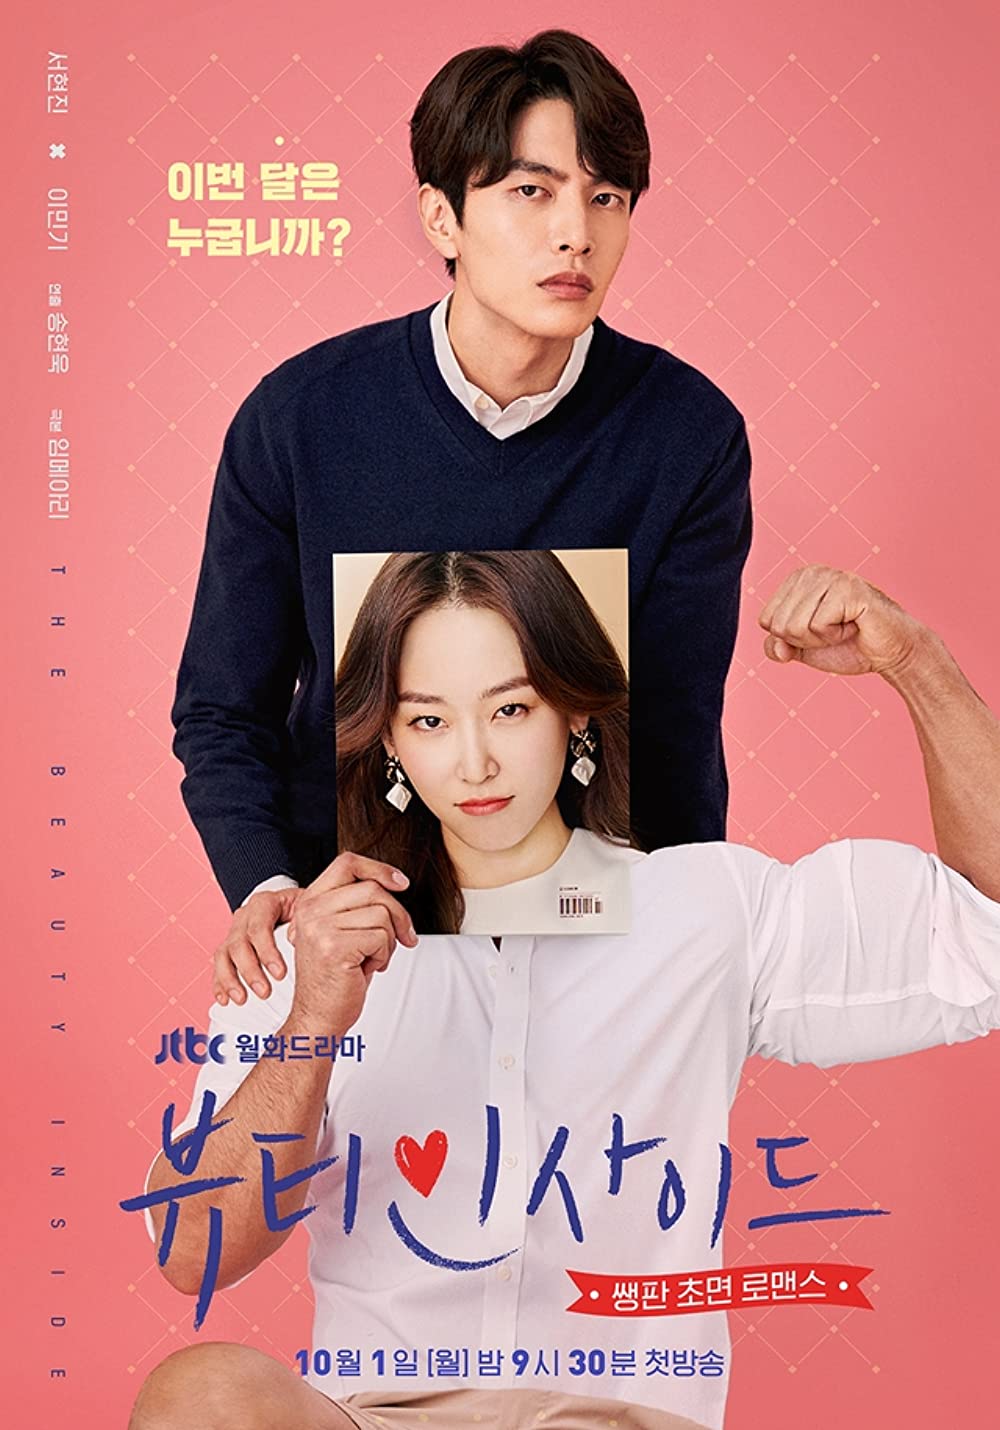 9 Rekomendasi drama Korea dibintangi Lee Min-ki, penuh kisah kehidupan